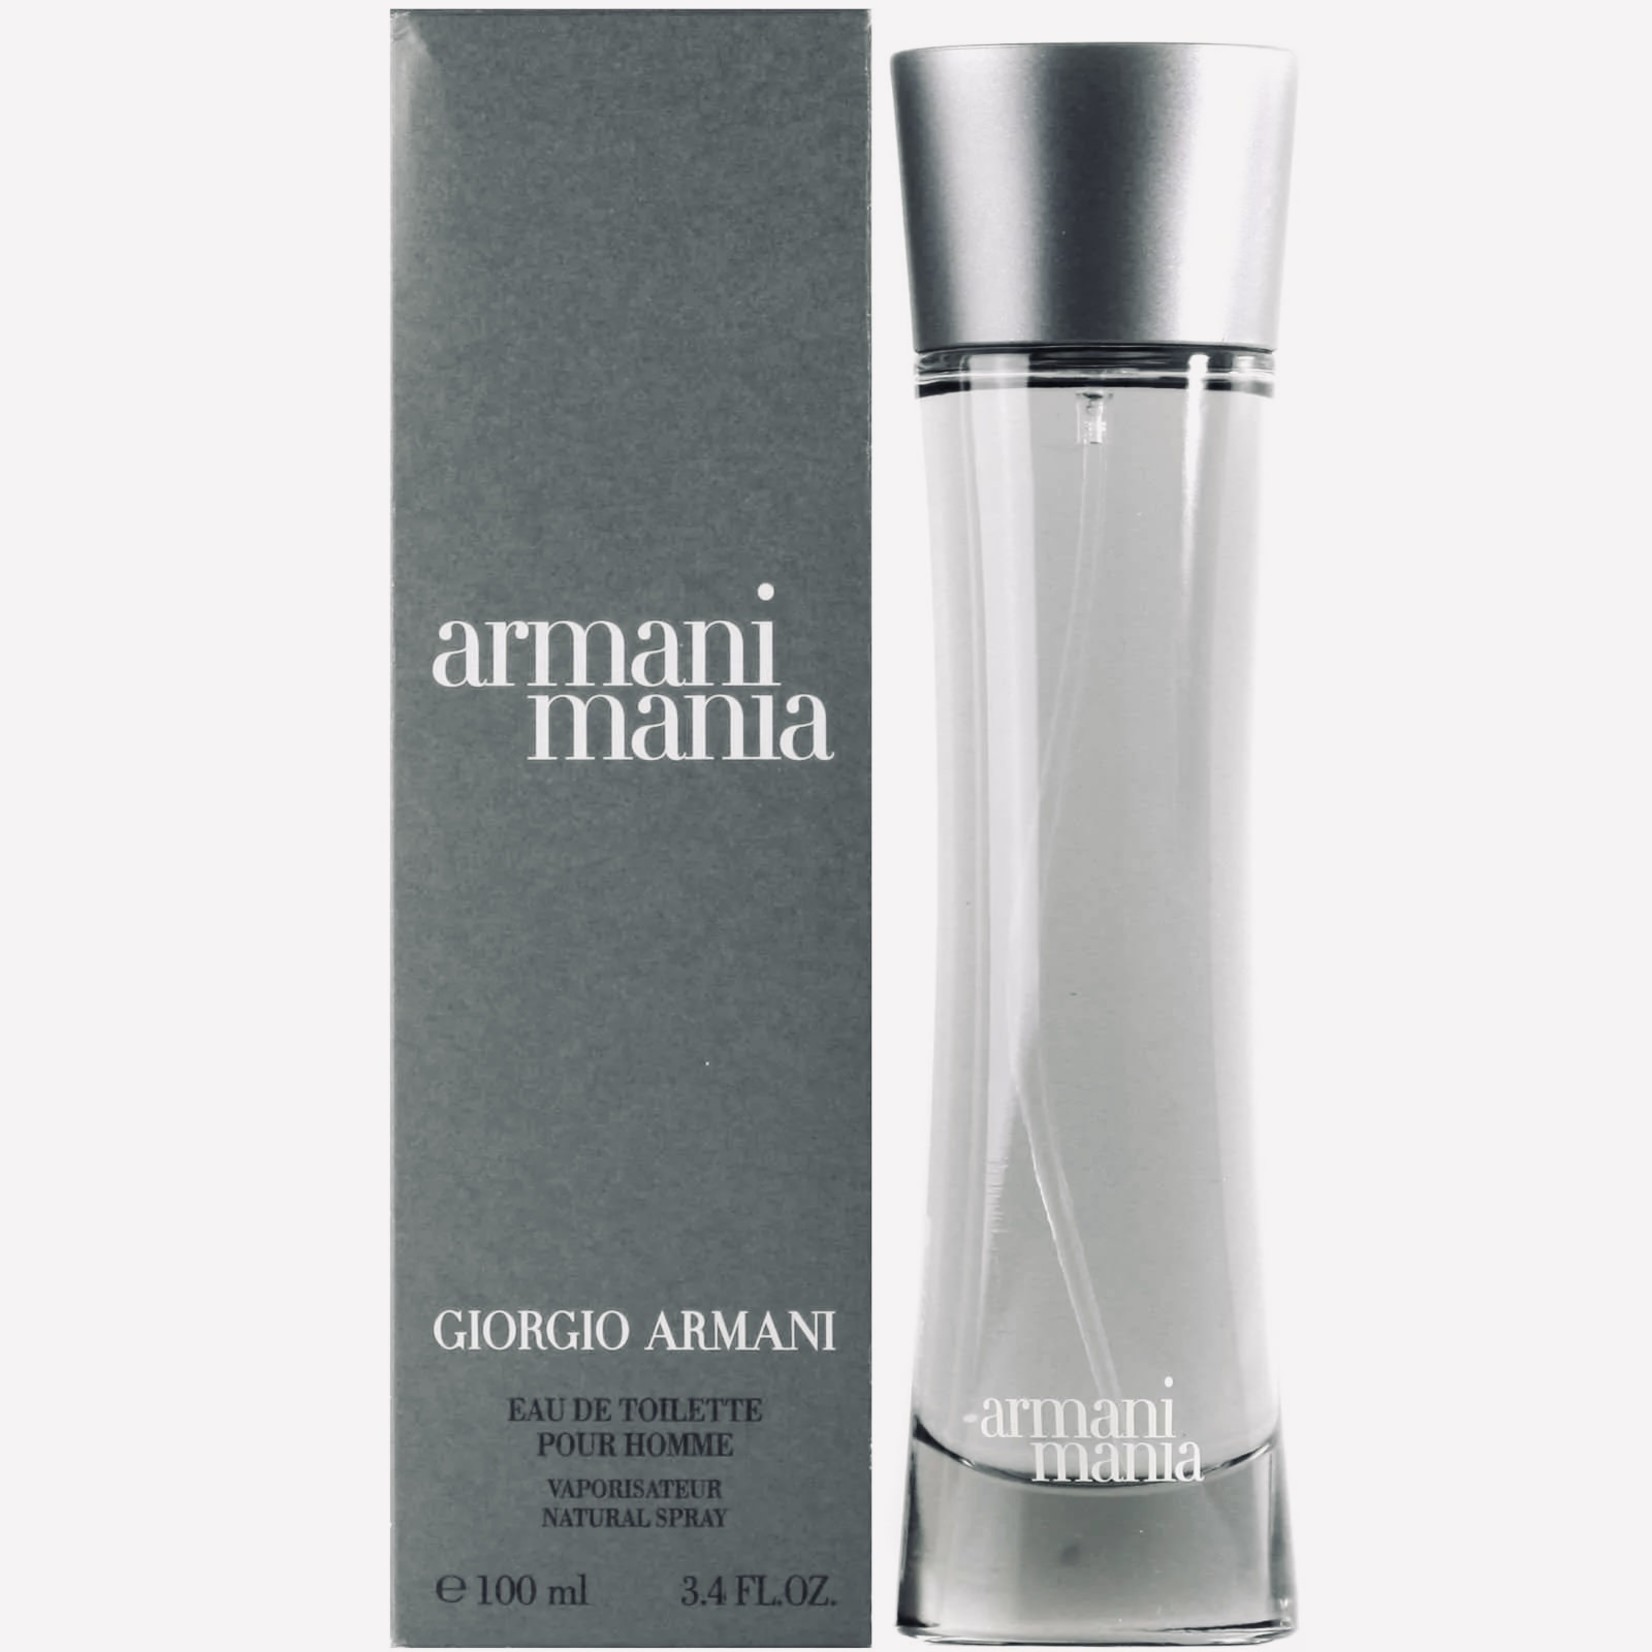 Giorgio Armani Armani Mania Eau de Toilette for Men/pour Homme